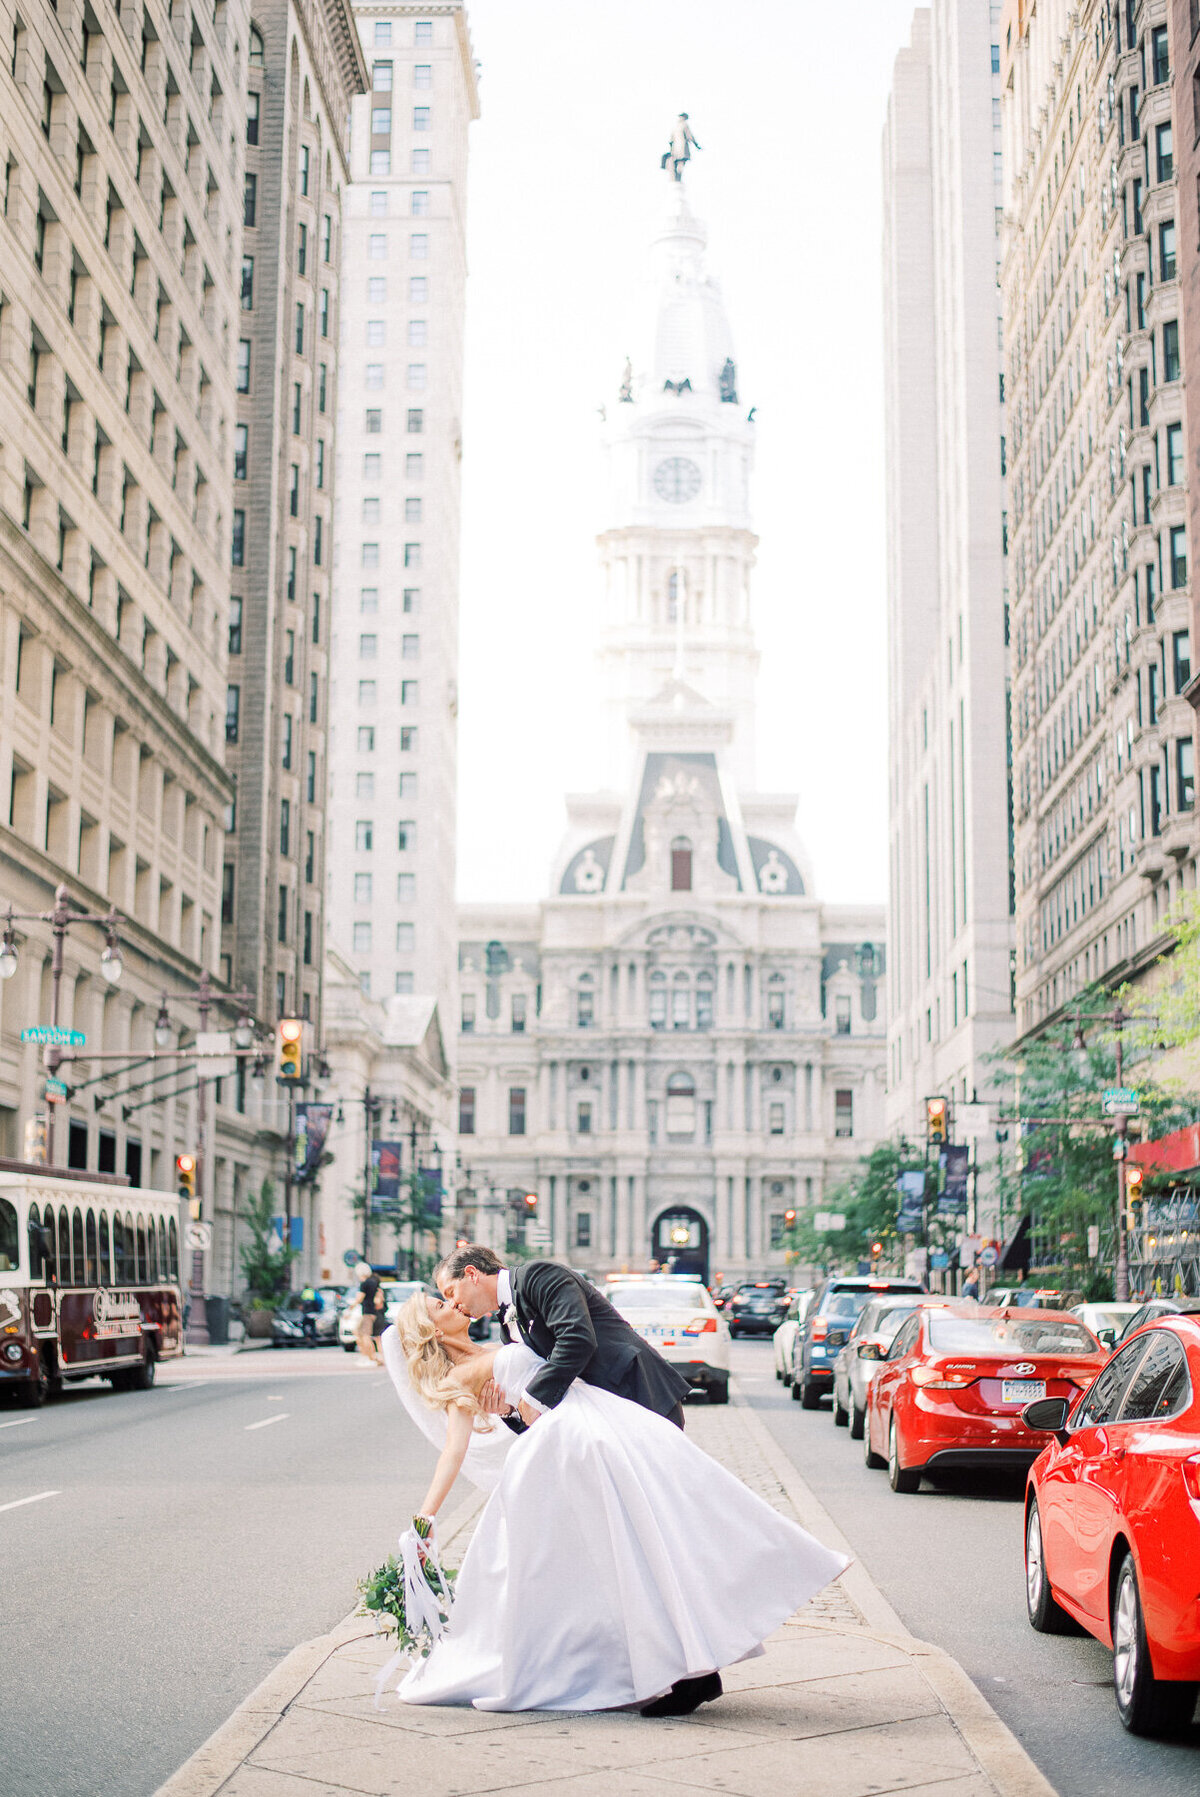 Michelle-Behre-Photography-Philadelphia-Academy-Fine-Art-Historic-Building-Wedding-08